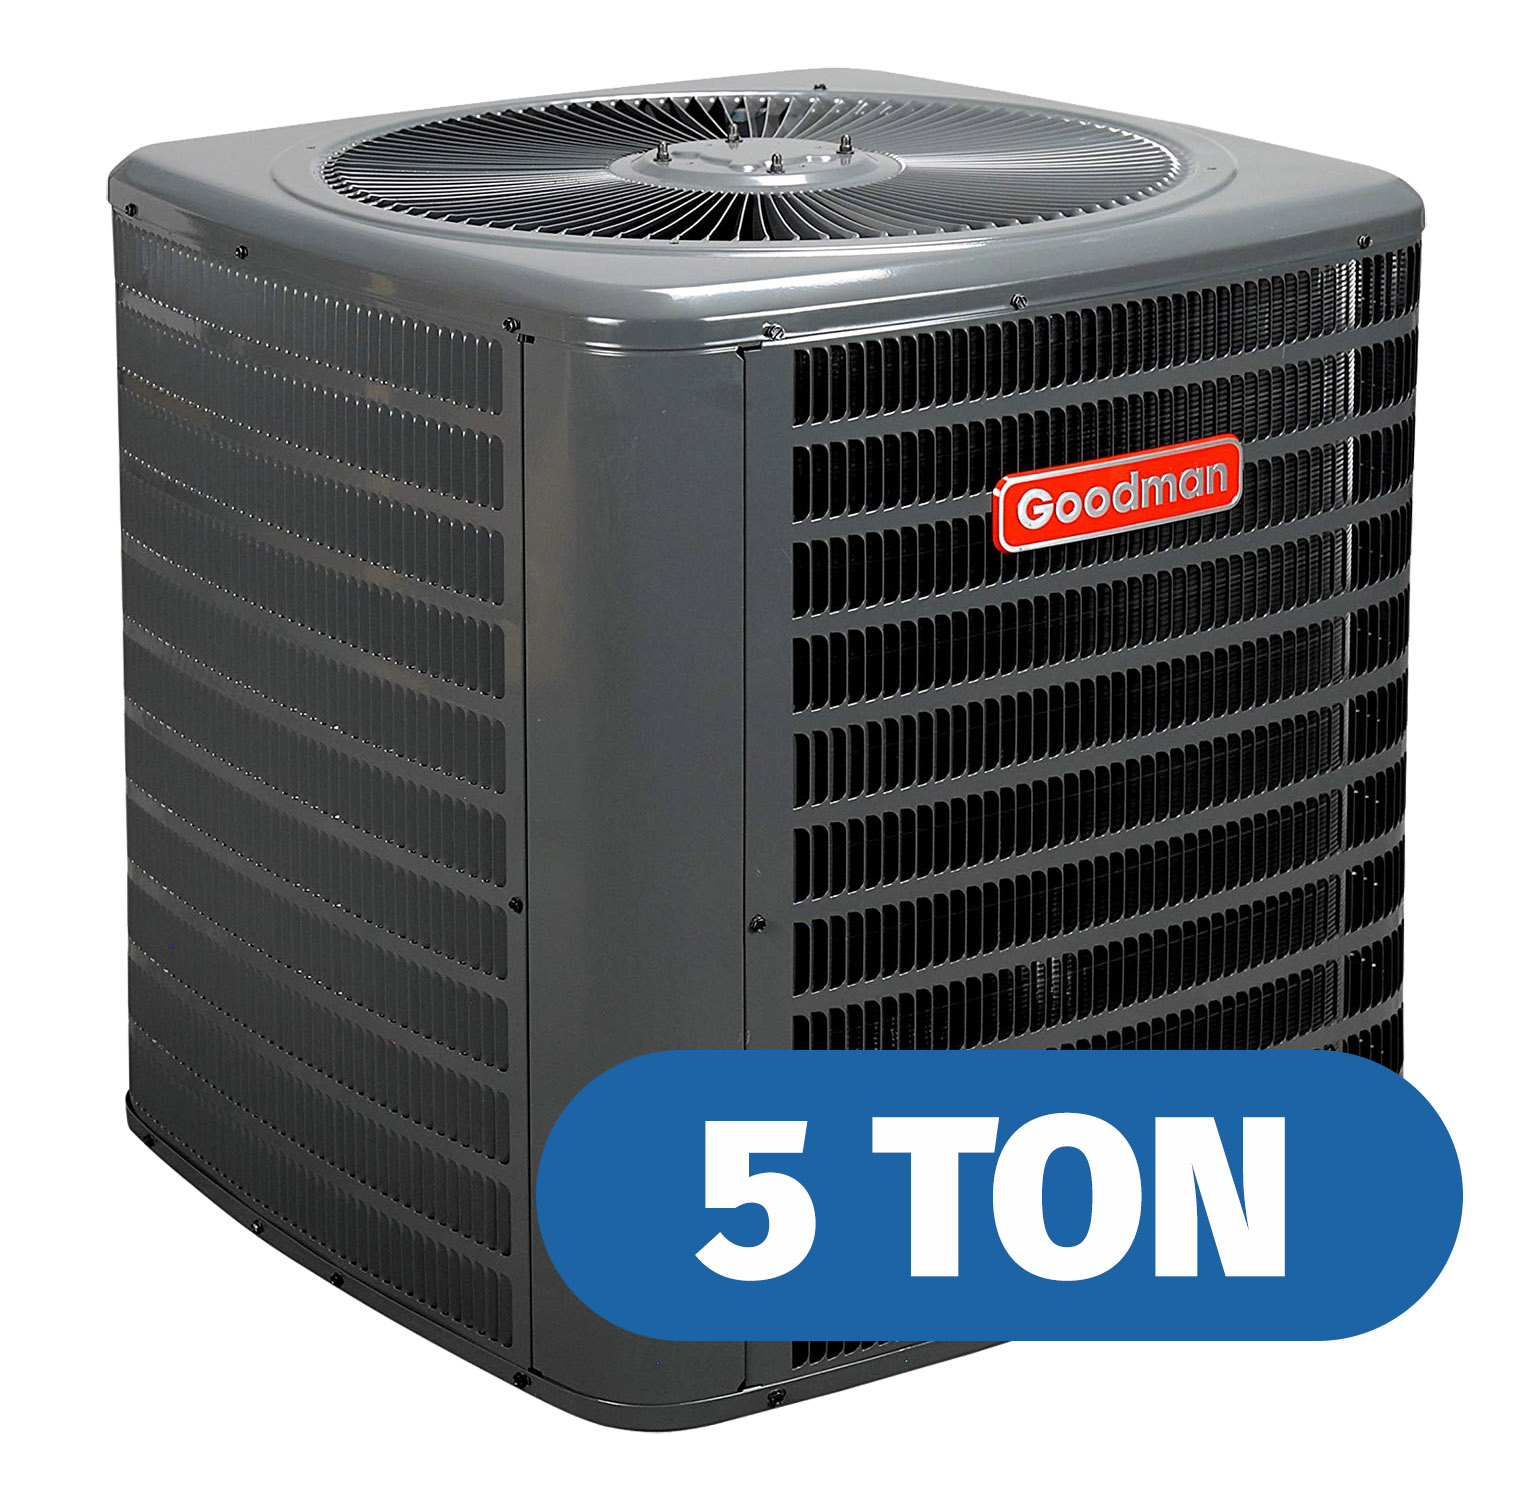 Goodman 5 Ton Air Conditioner